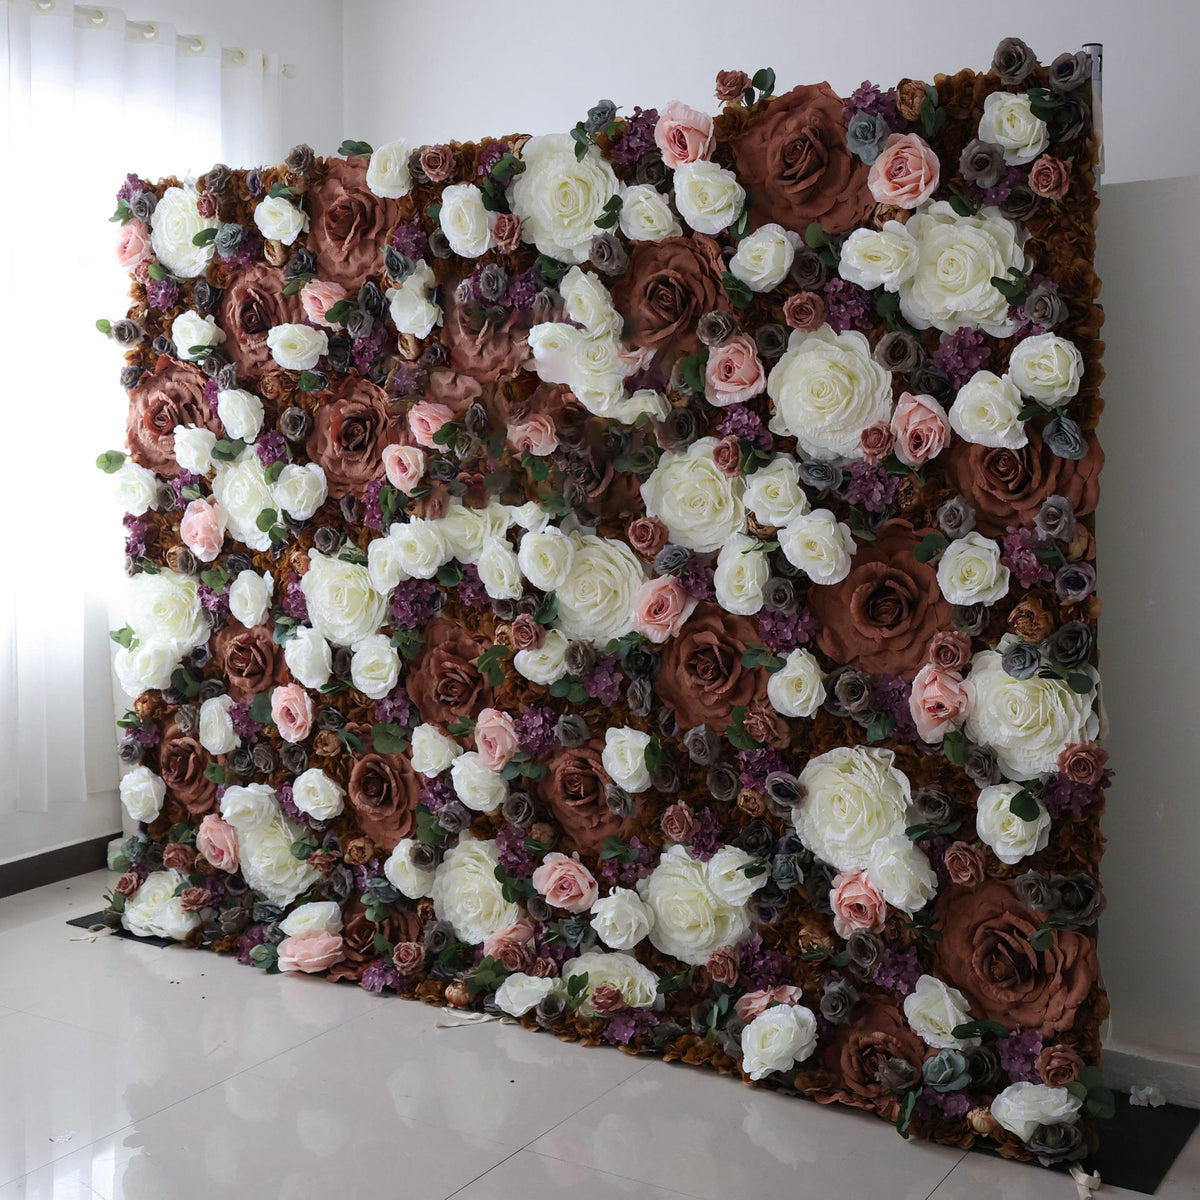 3D Artificial Flower Wall Arrangement Wedding Party Birthday Backdrop Decor HQ1320